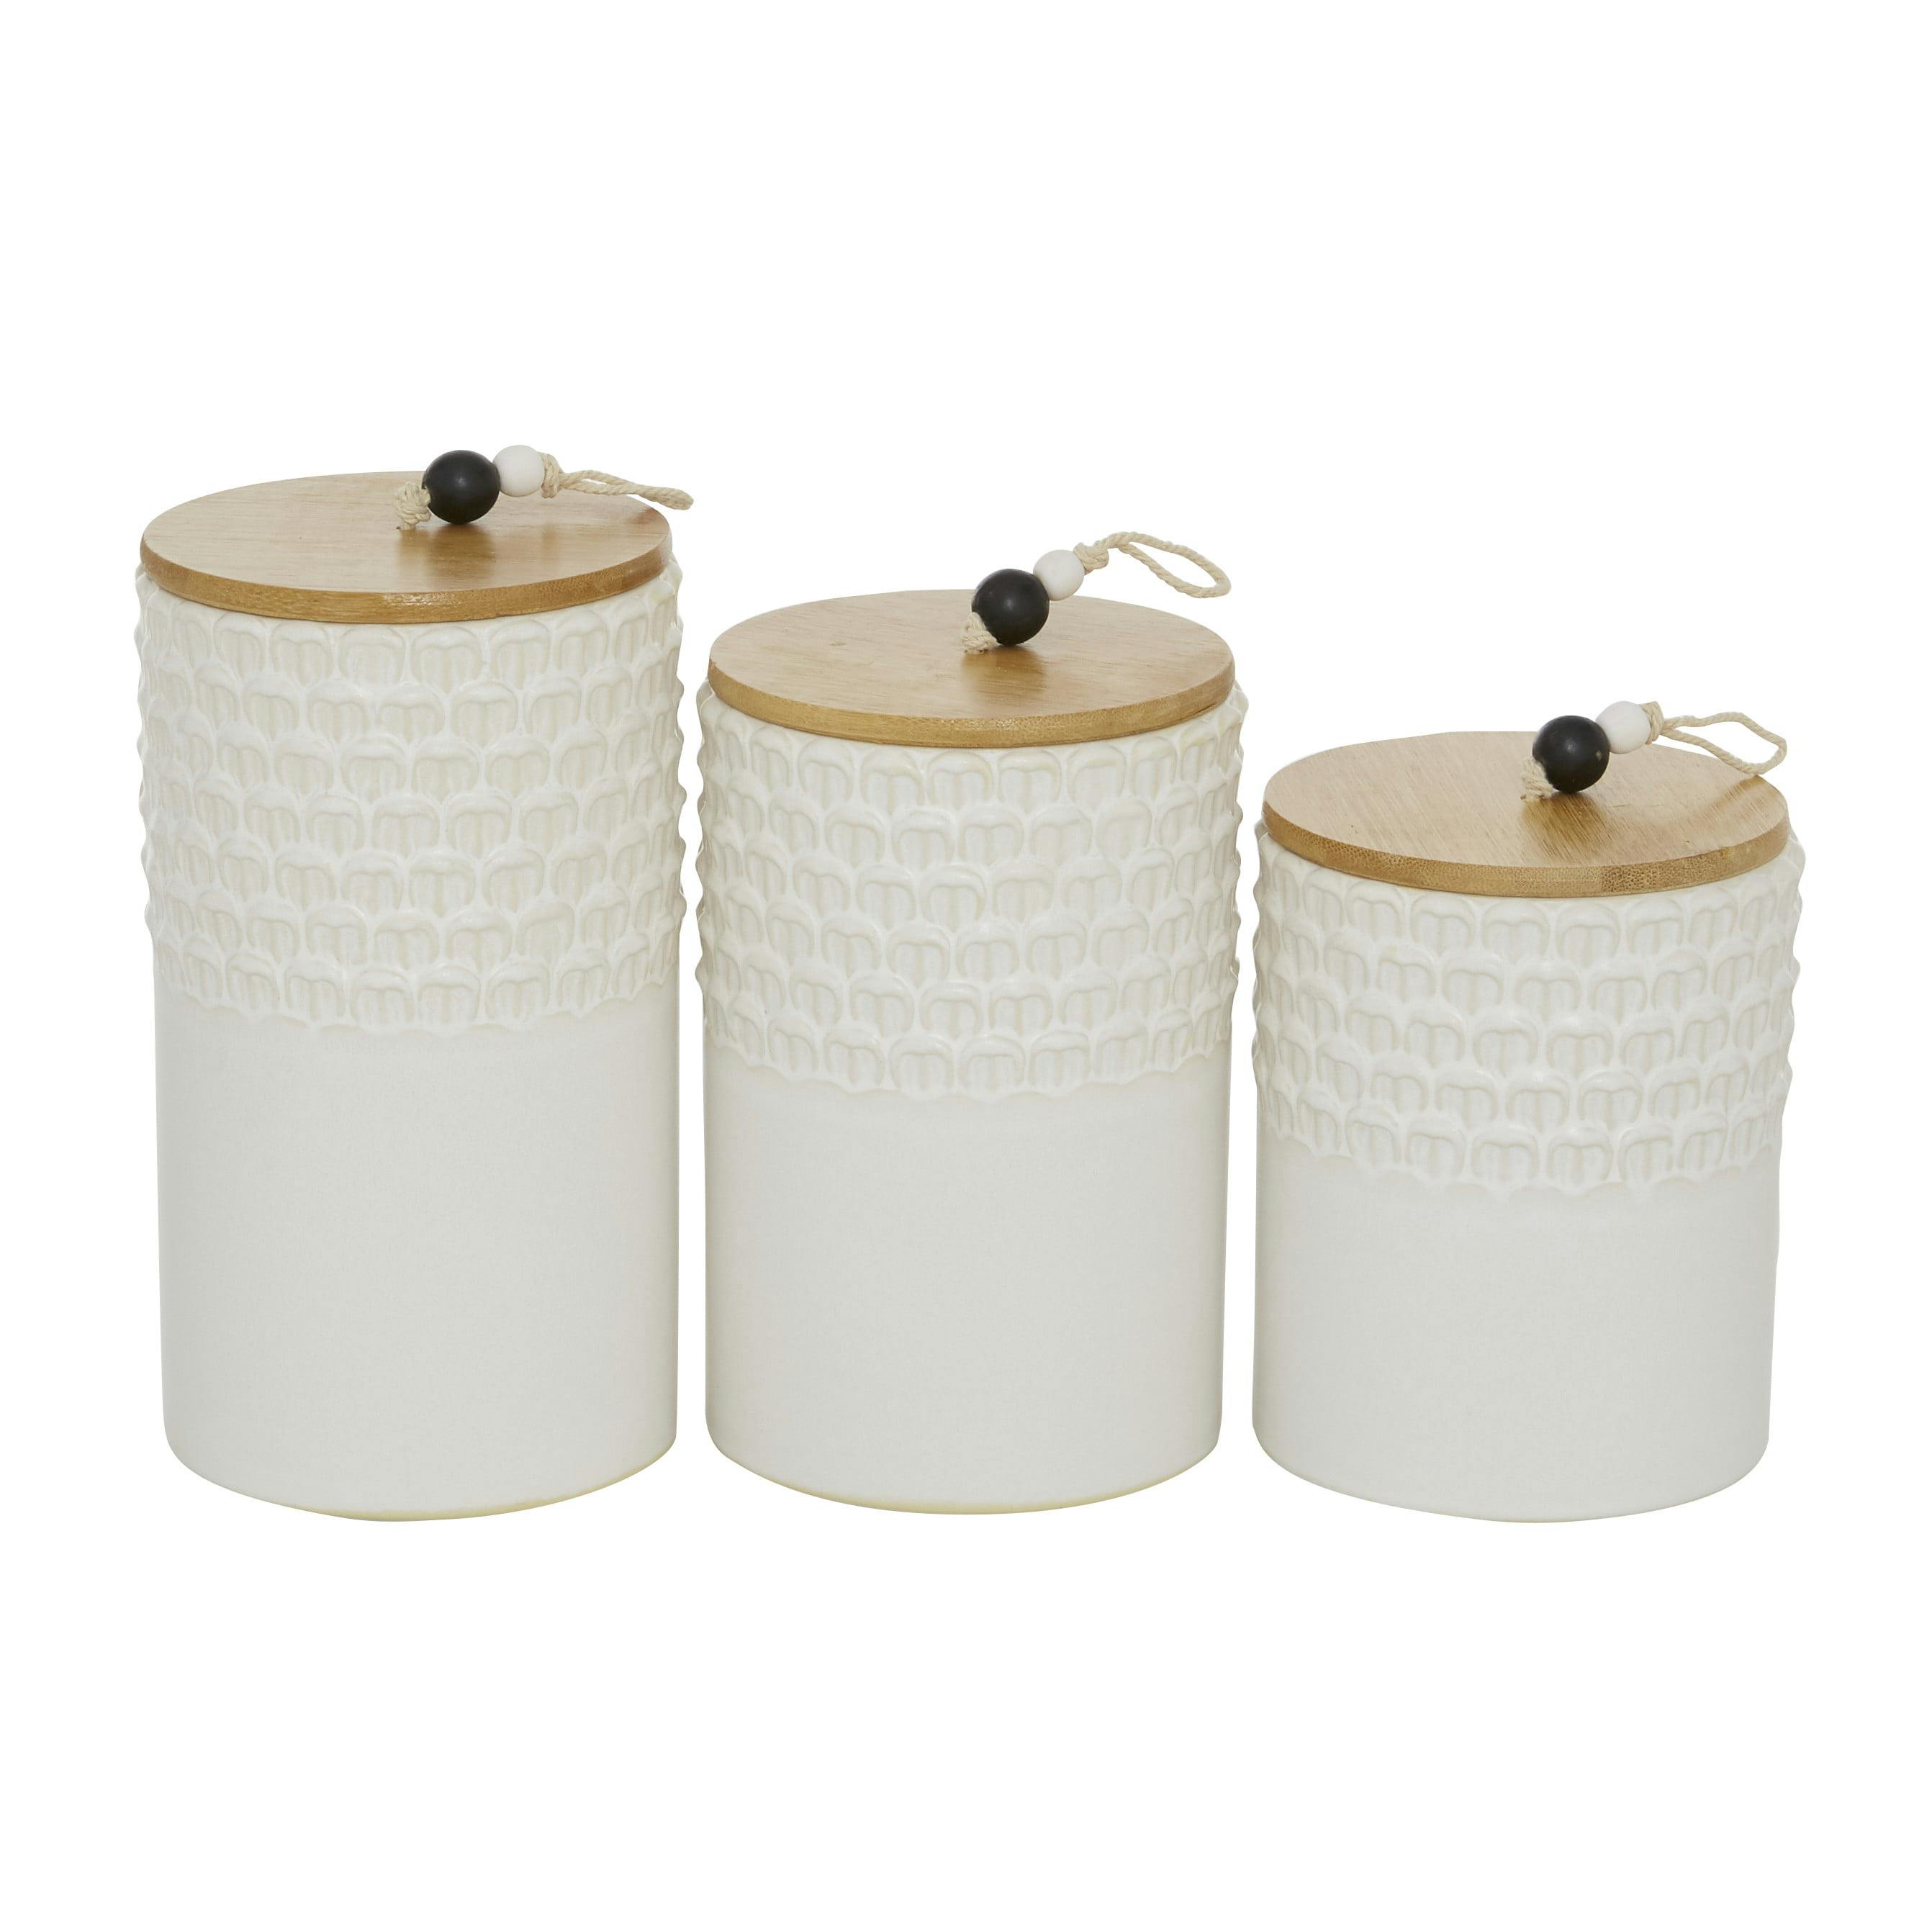 Charming White Ceramic Decorative Jar Trio with Wooden Lids